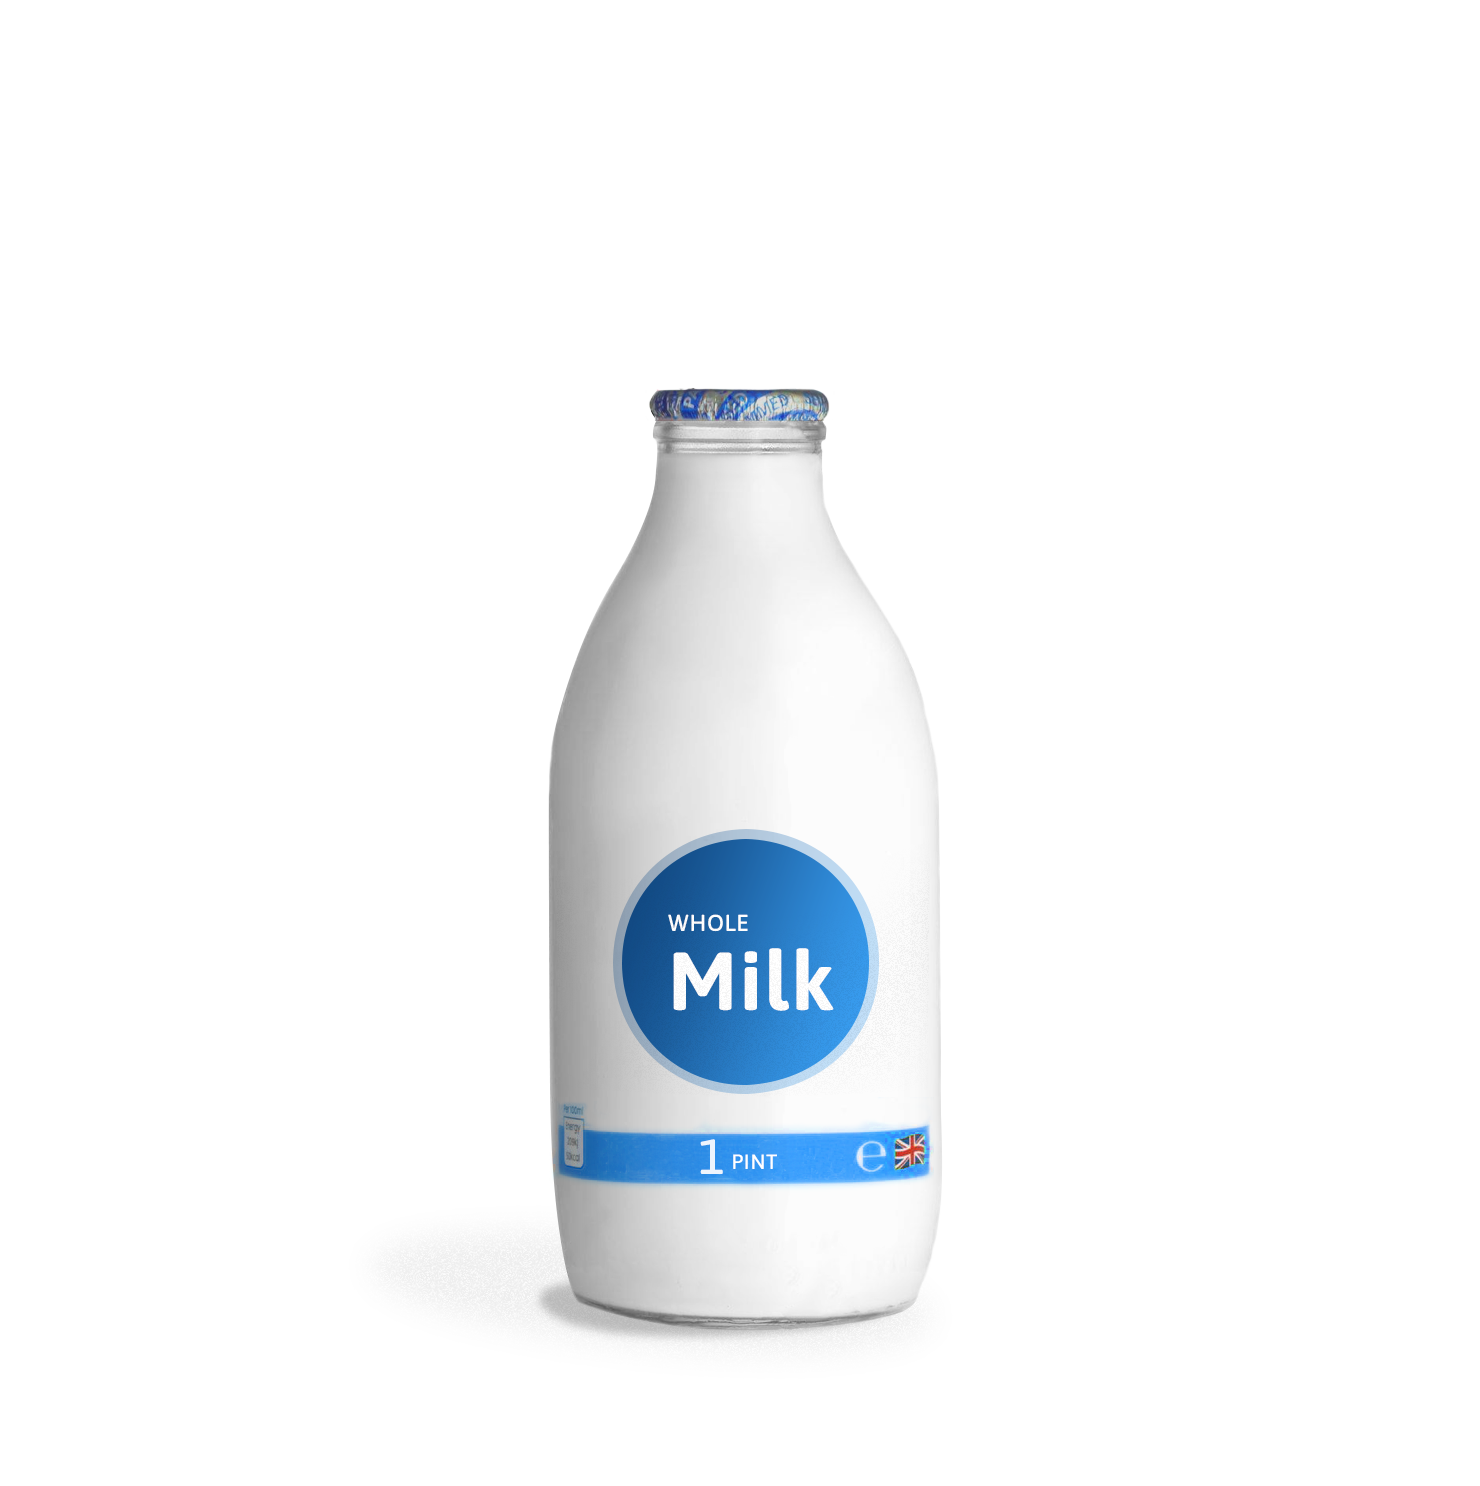 Milk Bottle Images